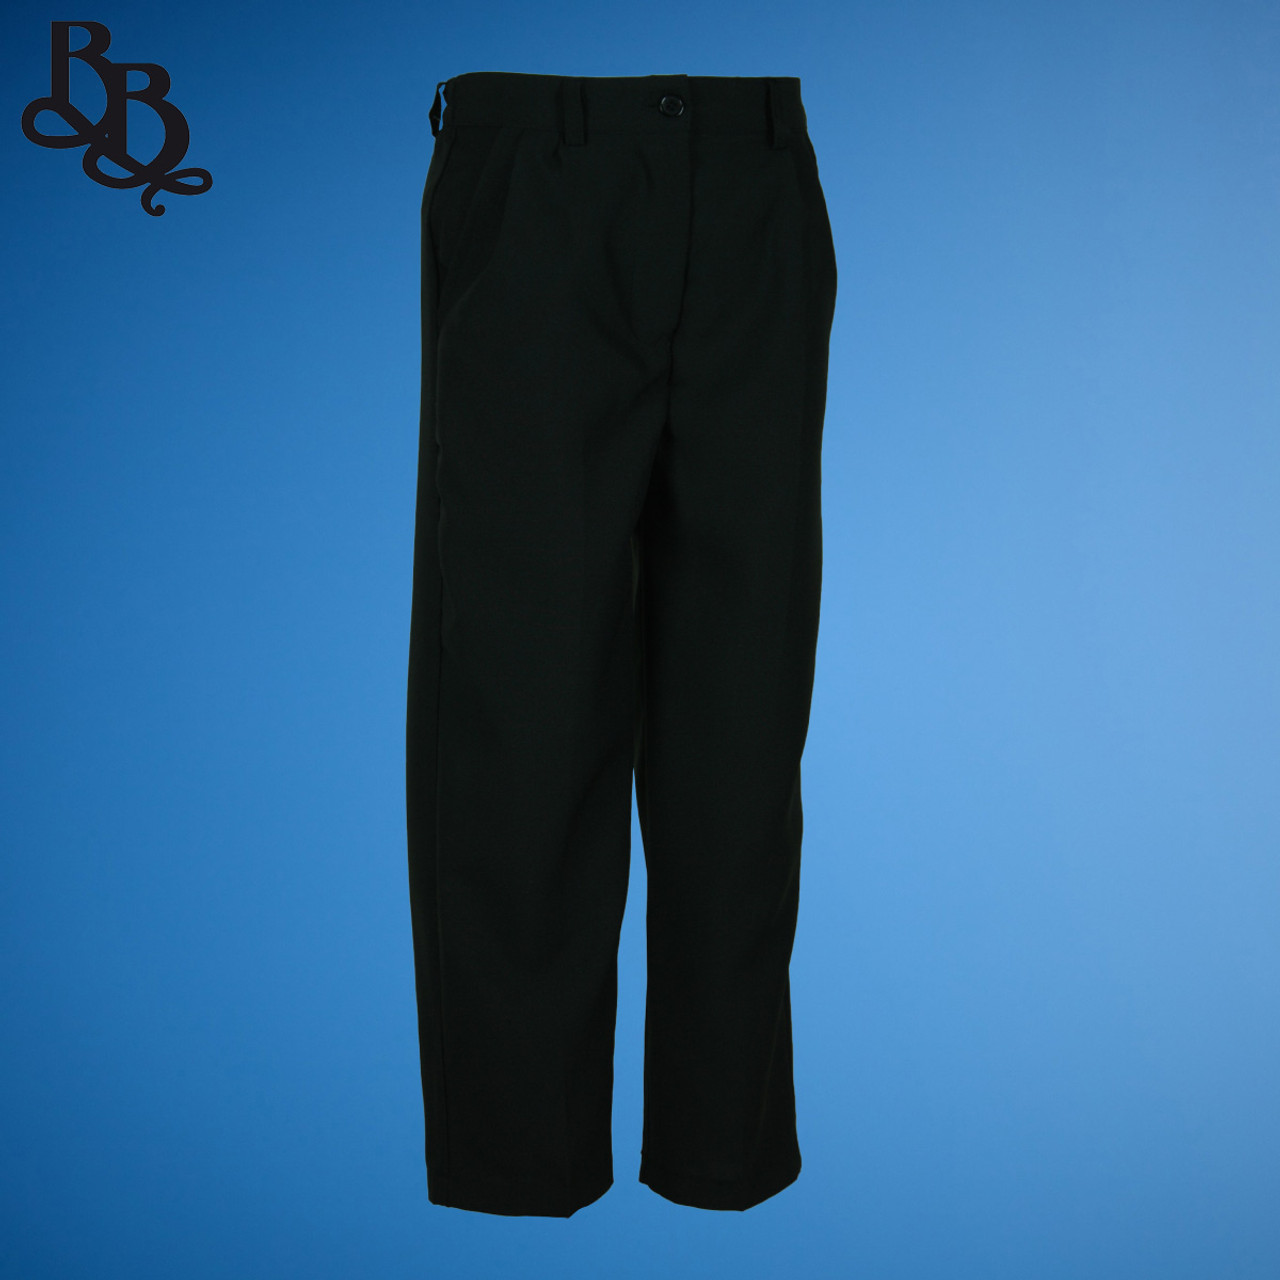 Minicoy Men's Slim Fit Black Formal Trouser for Men and Boys - Polyester  Viscose Bottom Formal Pants